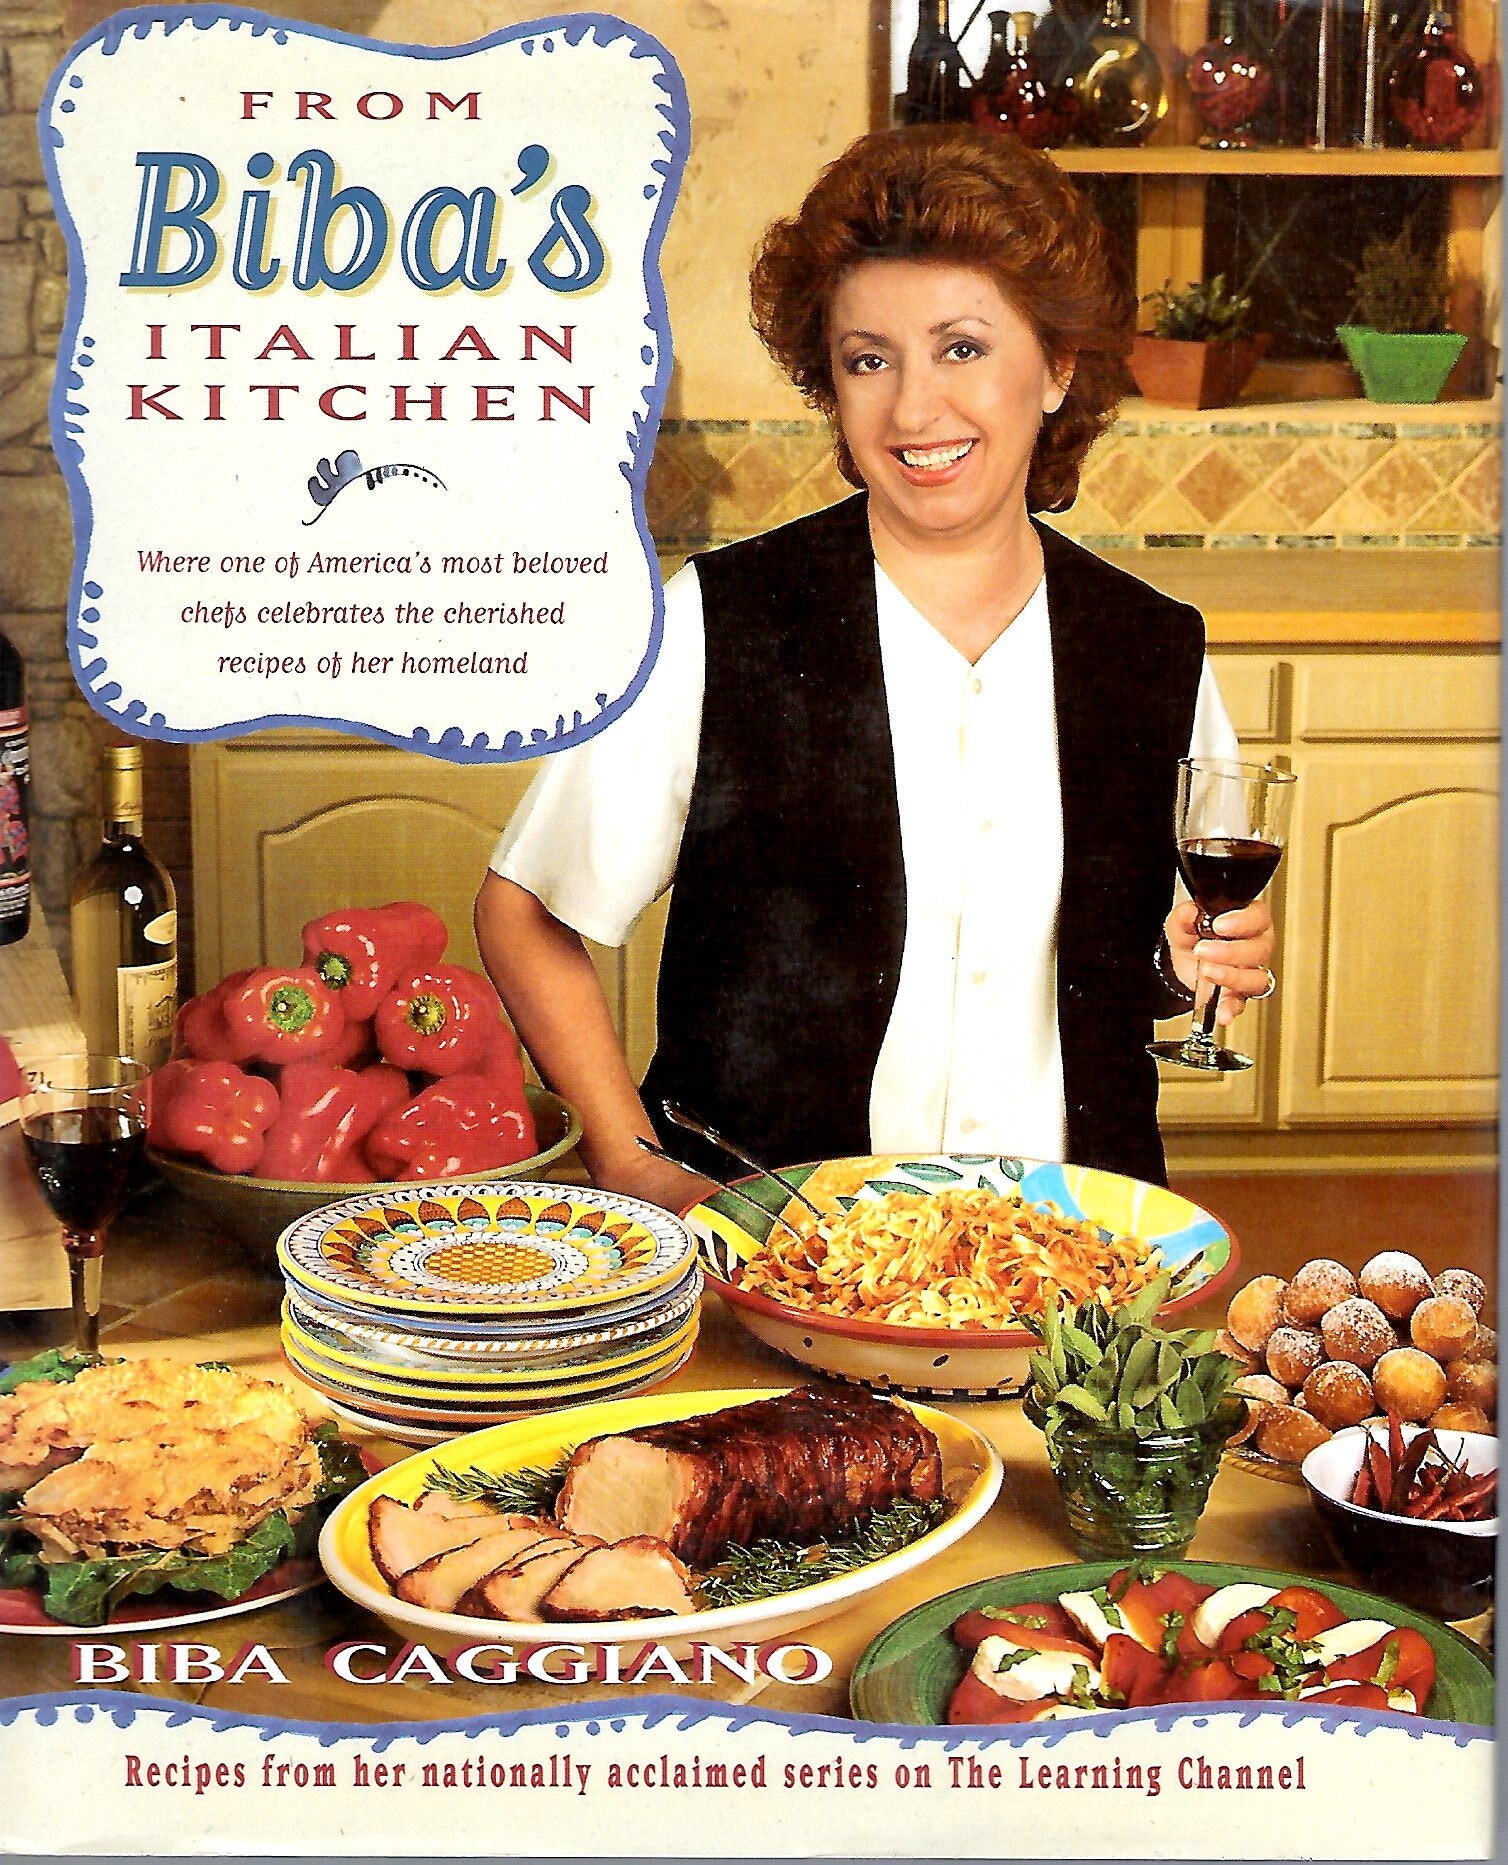 Libro de cocina italiano vintage Bibas Cocina italiana Recetas - Etsy España